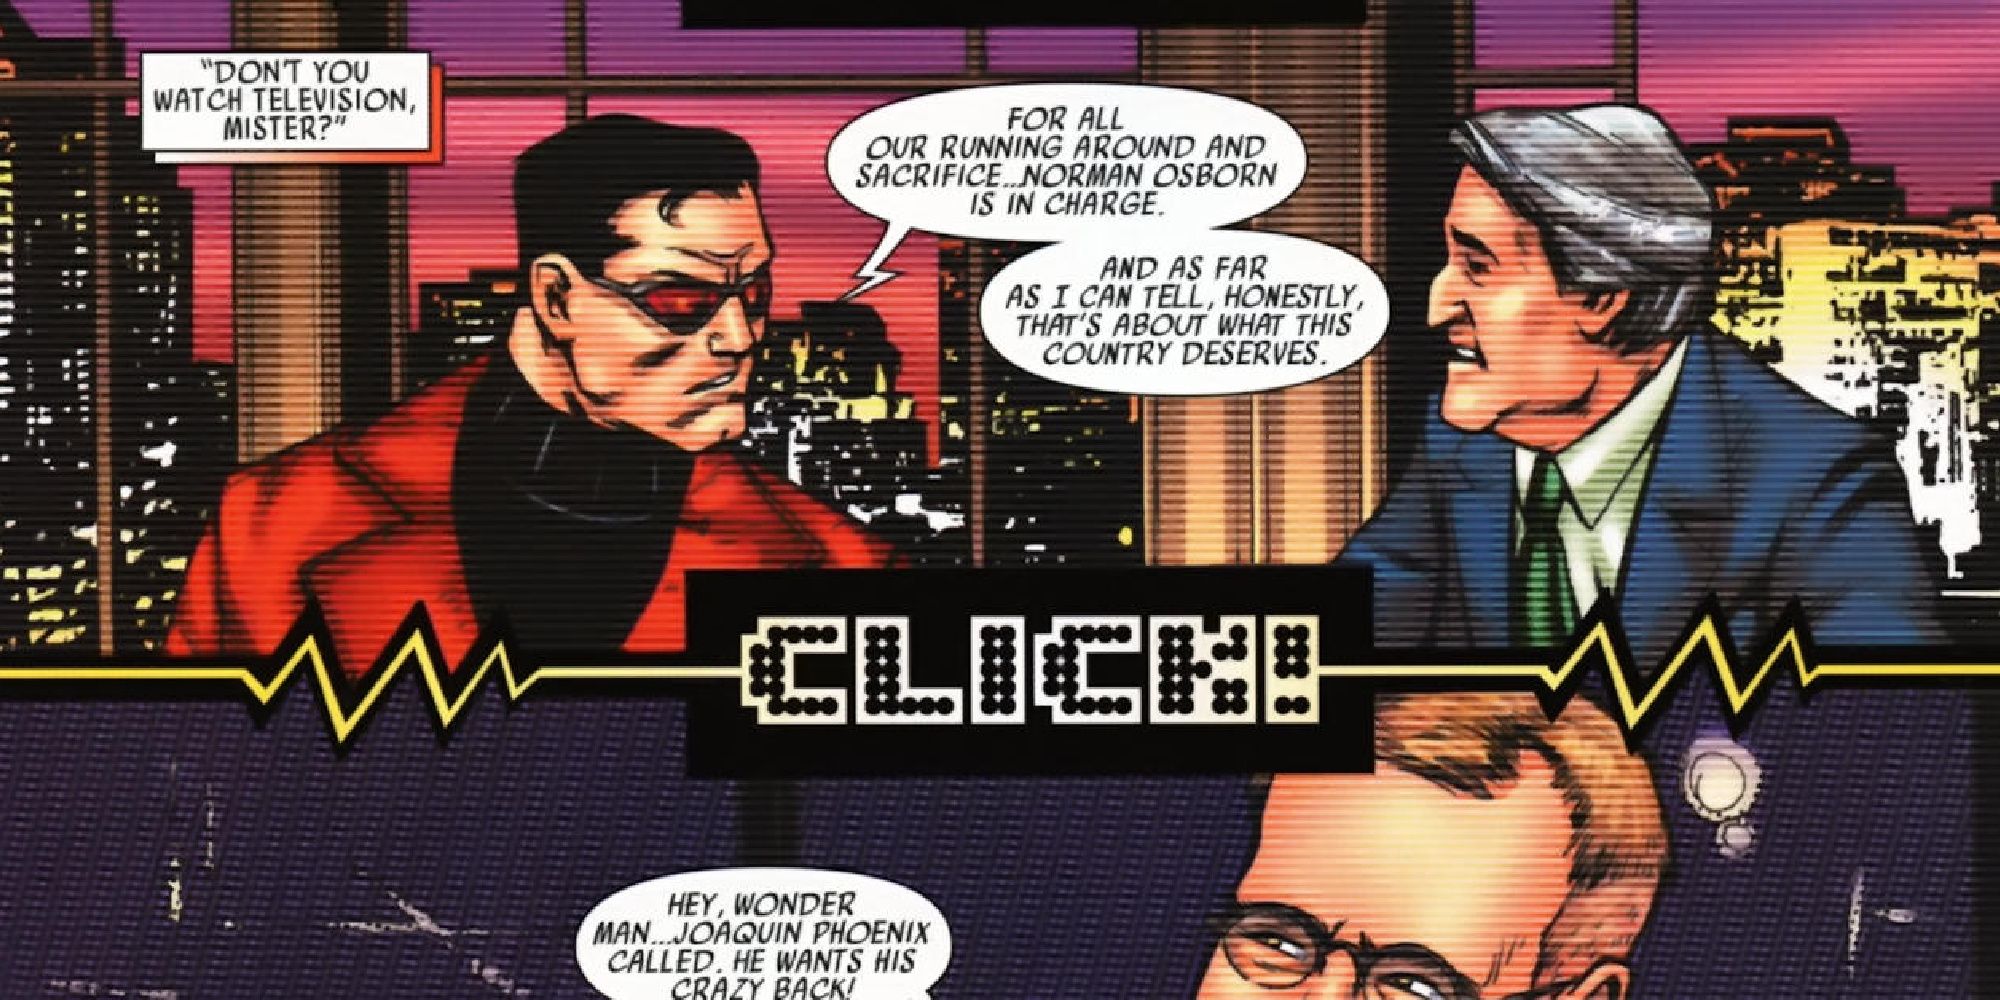 Wonder Man goes on TV in Marvel Comics.